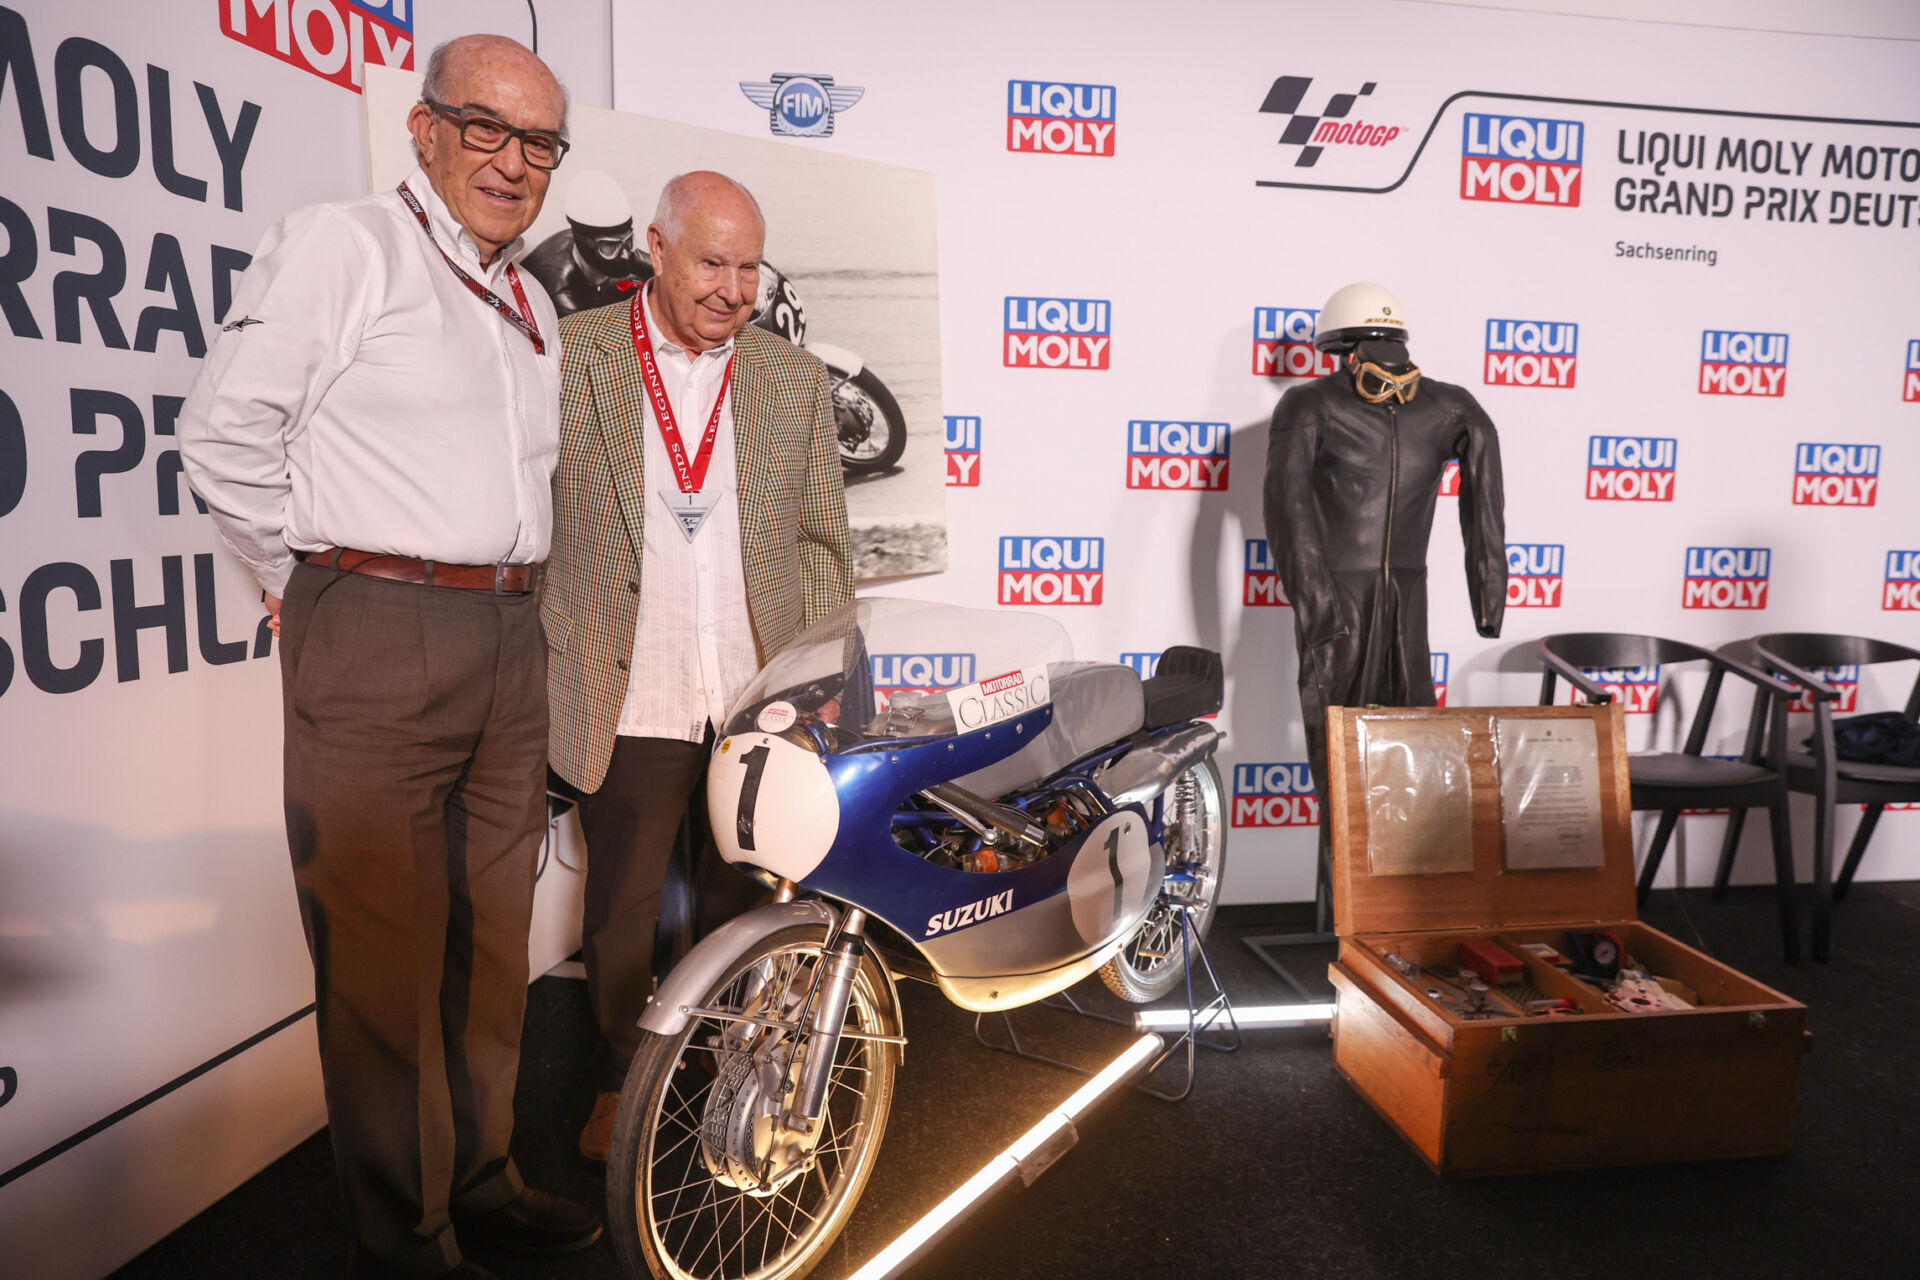 Hans-Georg Anscheidt (right) with Dorna CEO Carmelo Ezpeleta (left) and Anscheidt's World Championship winning Suzuki. Photo courtesy Dorna.